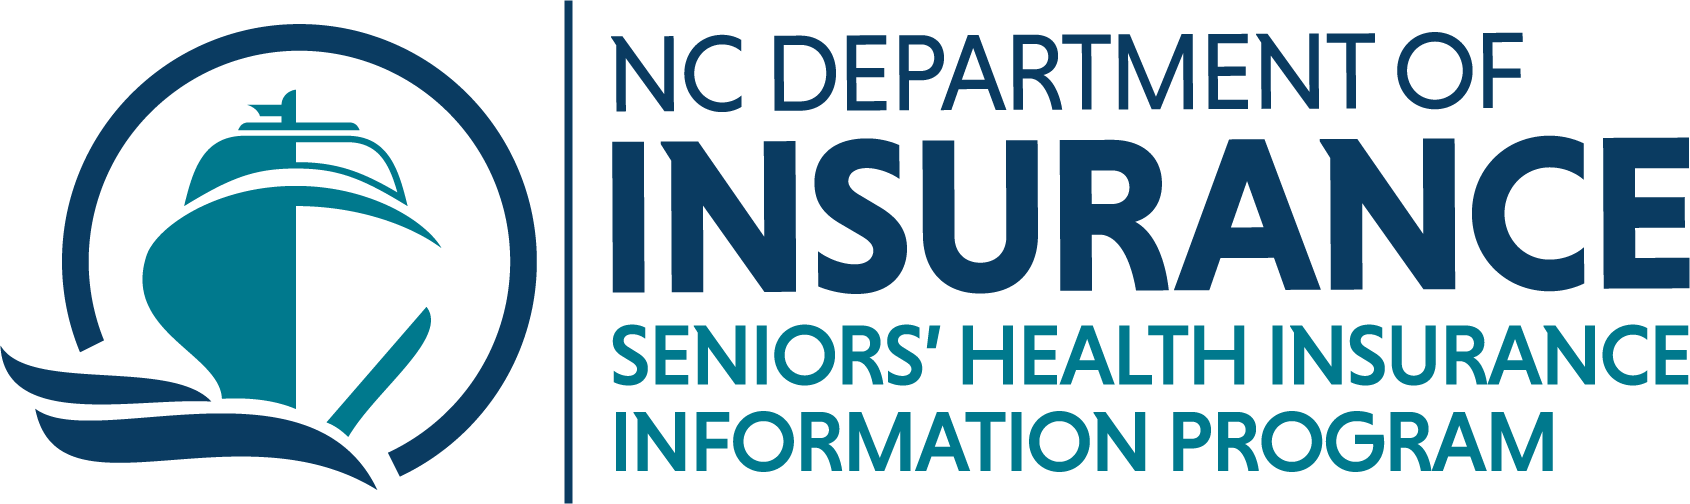 Seniors Health Insurance Information Program Logo